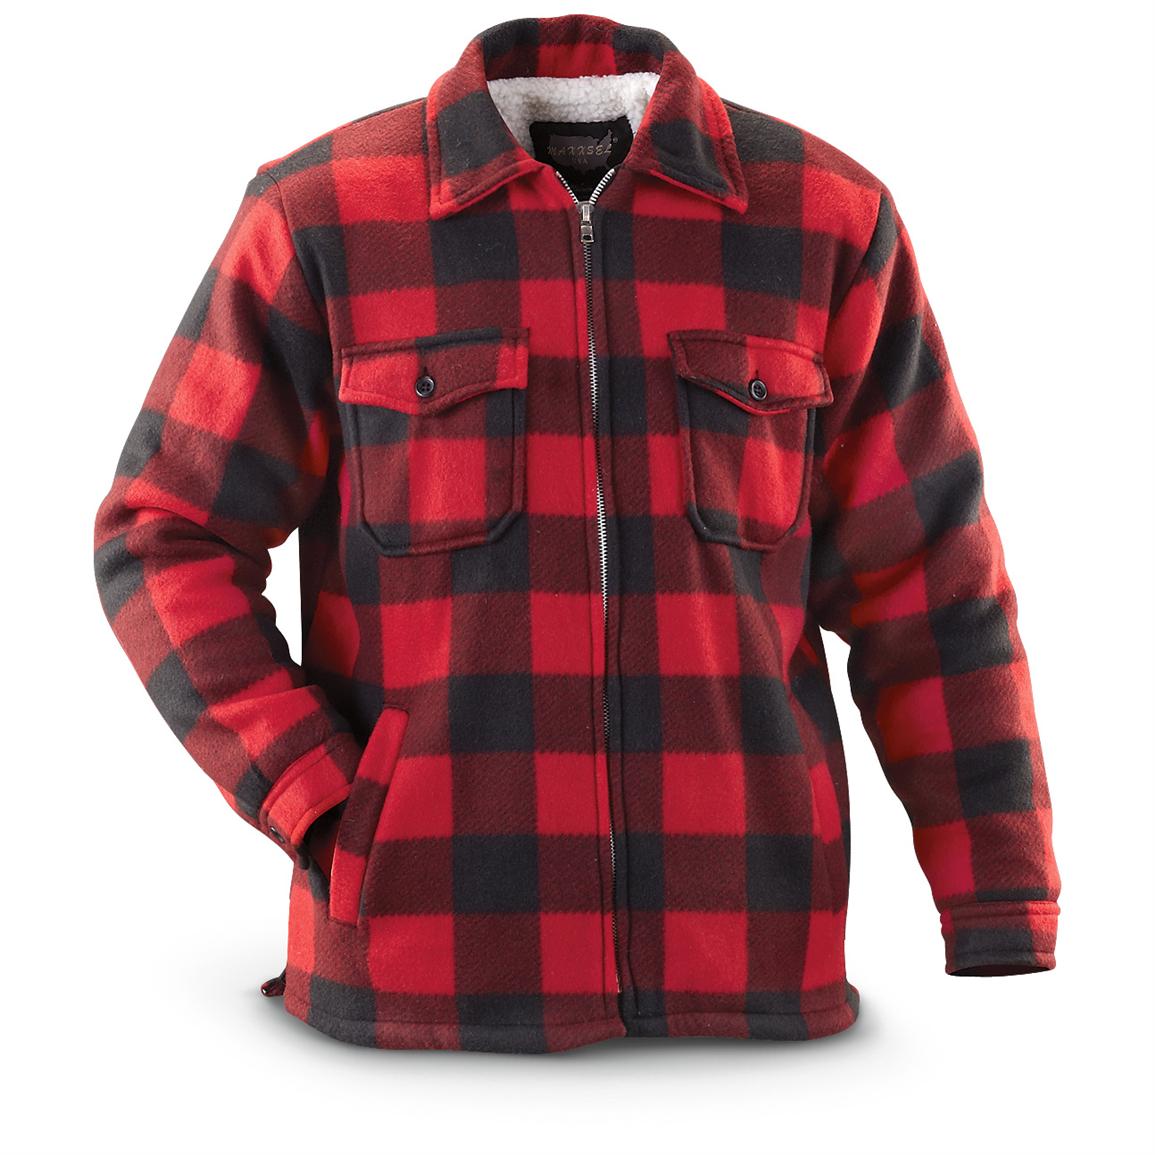 Maxsell® Fleece Jacket, Red Plaid - 207551, Fleece & Soft Shell ...